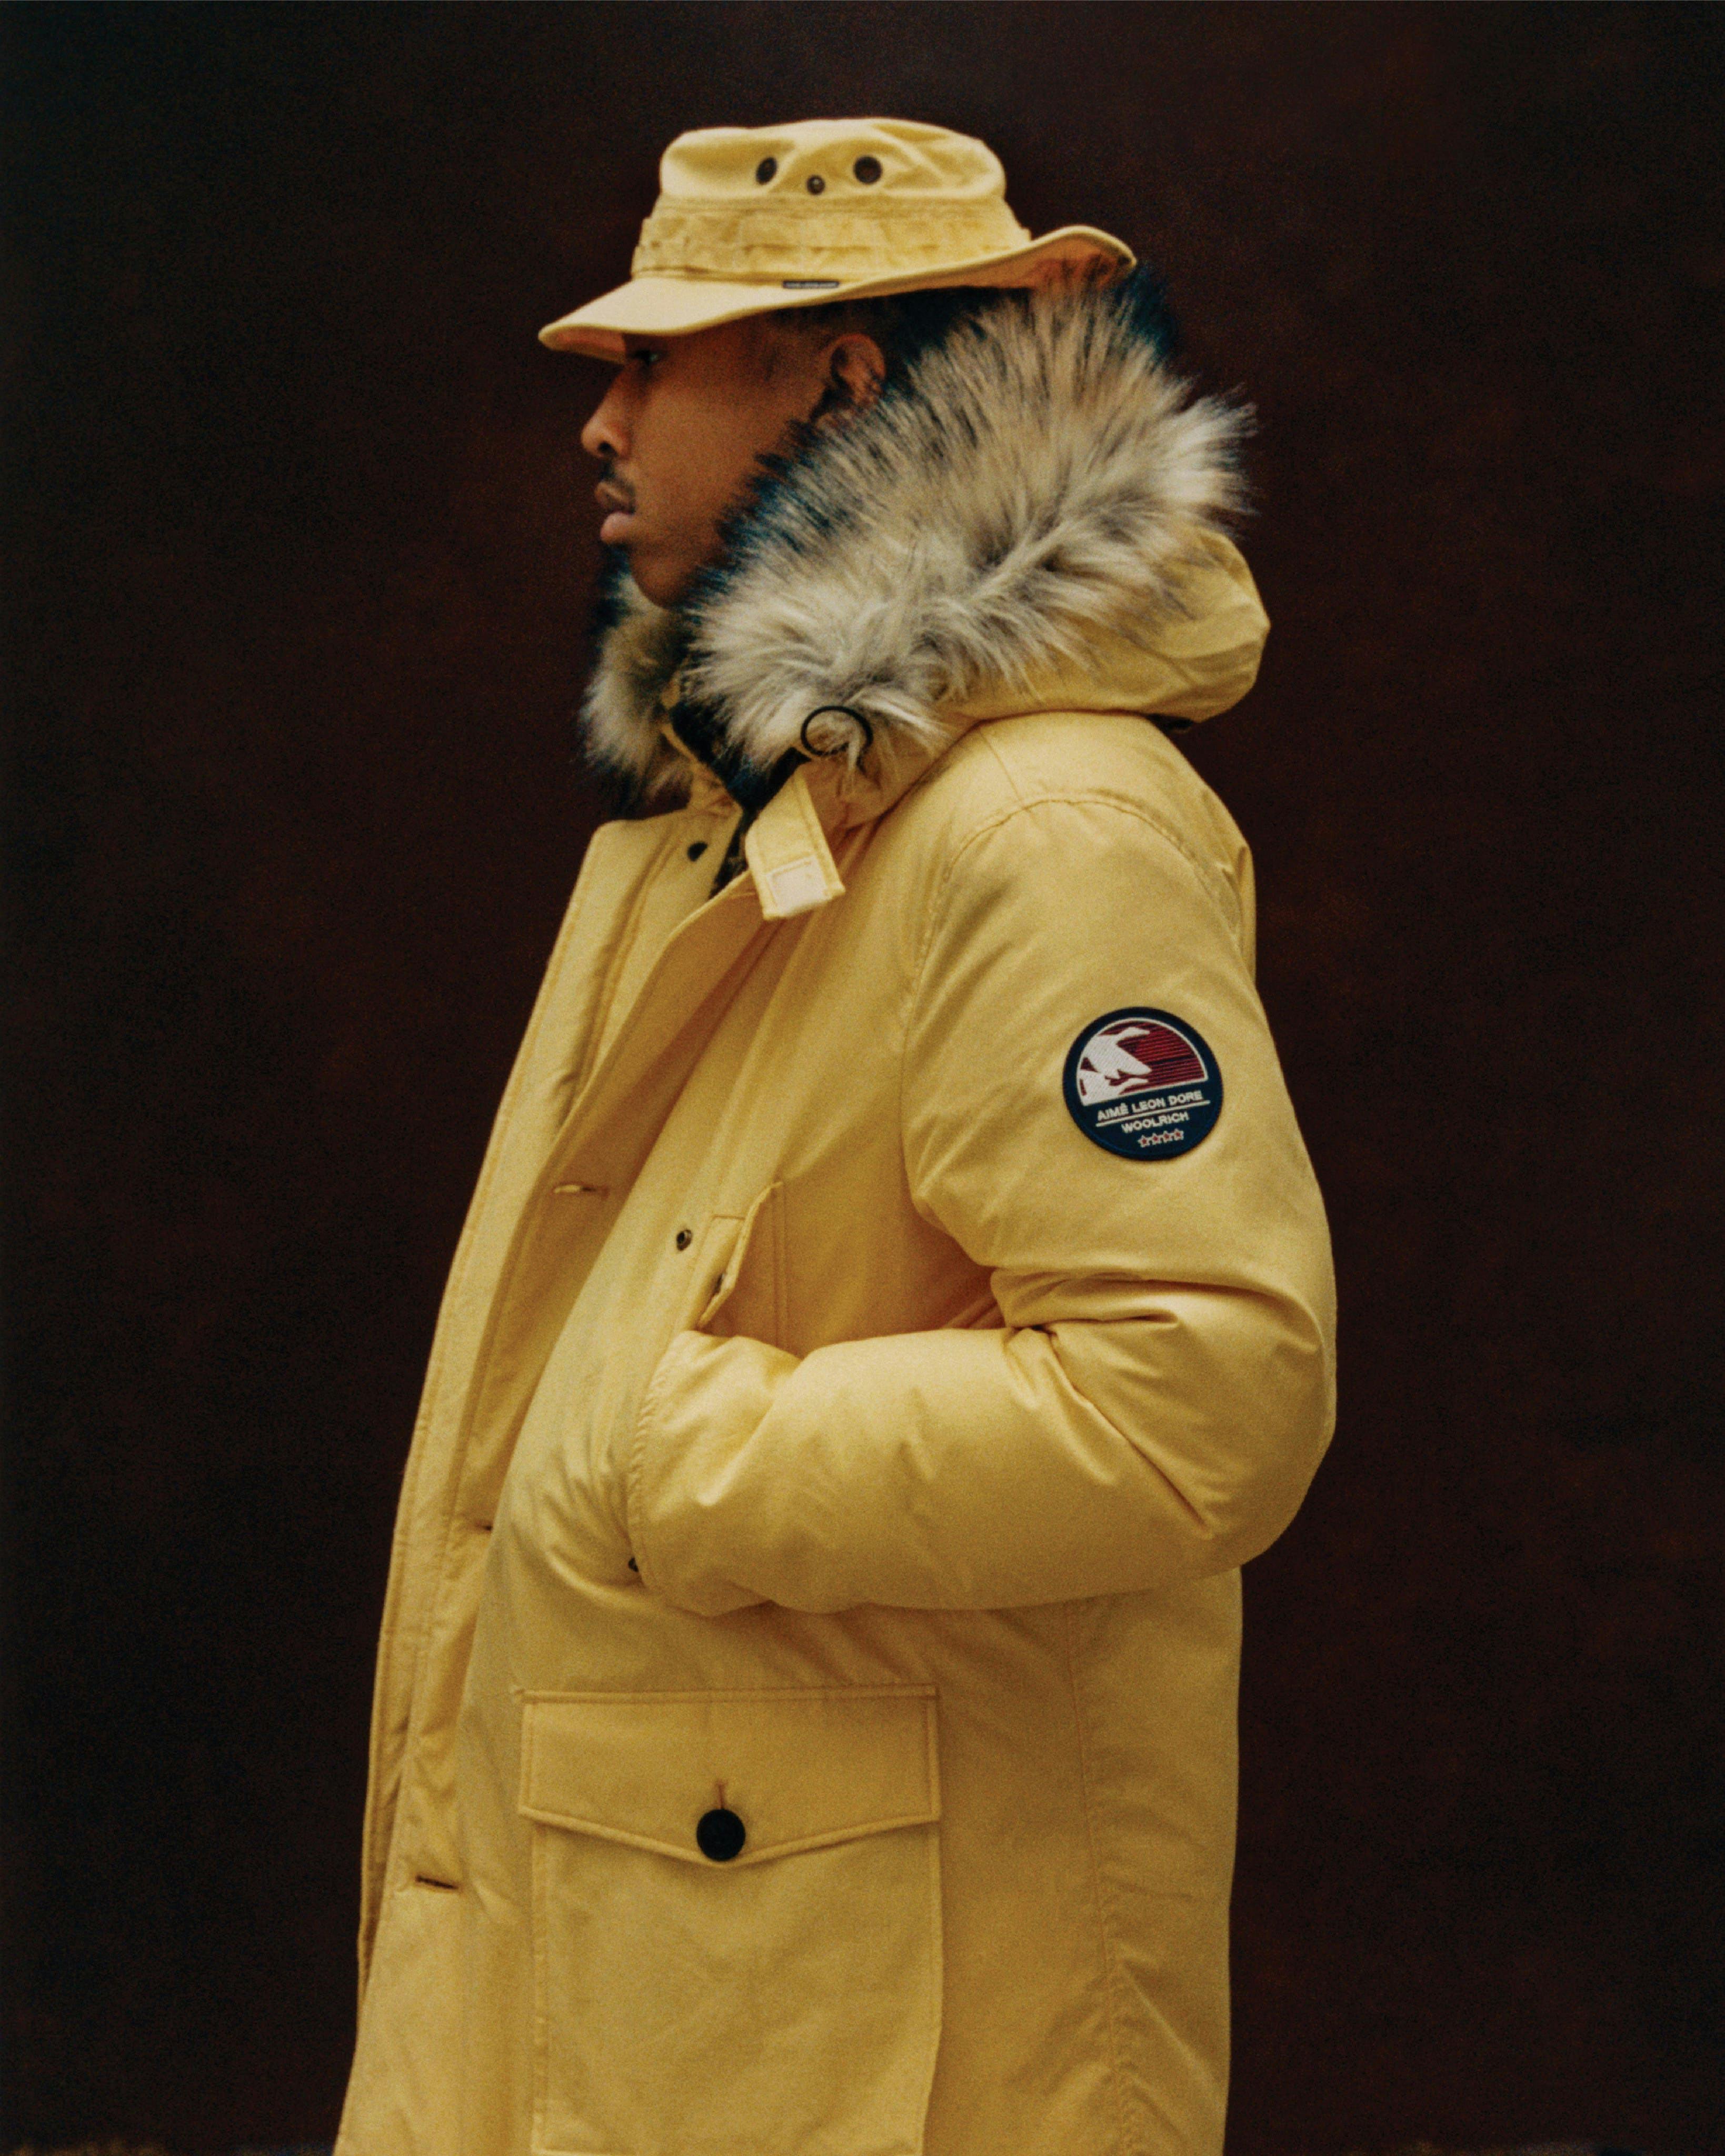 coat clothing hat jacket overcoat face person head